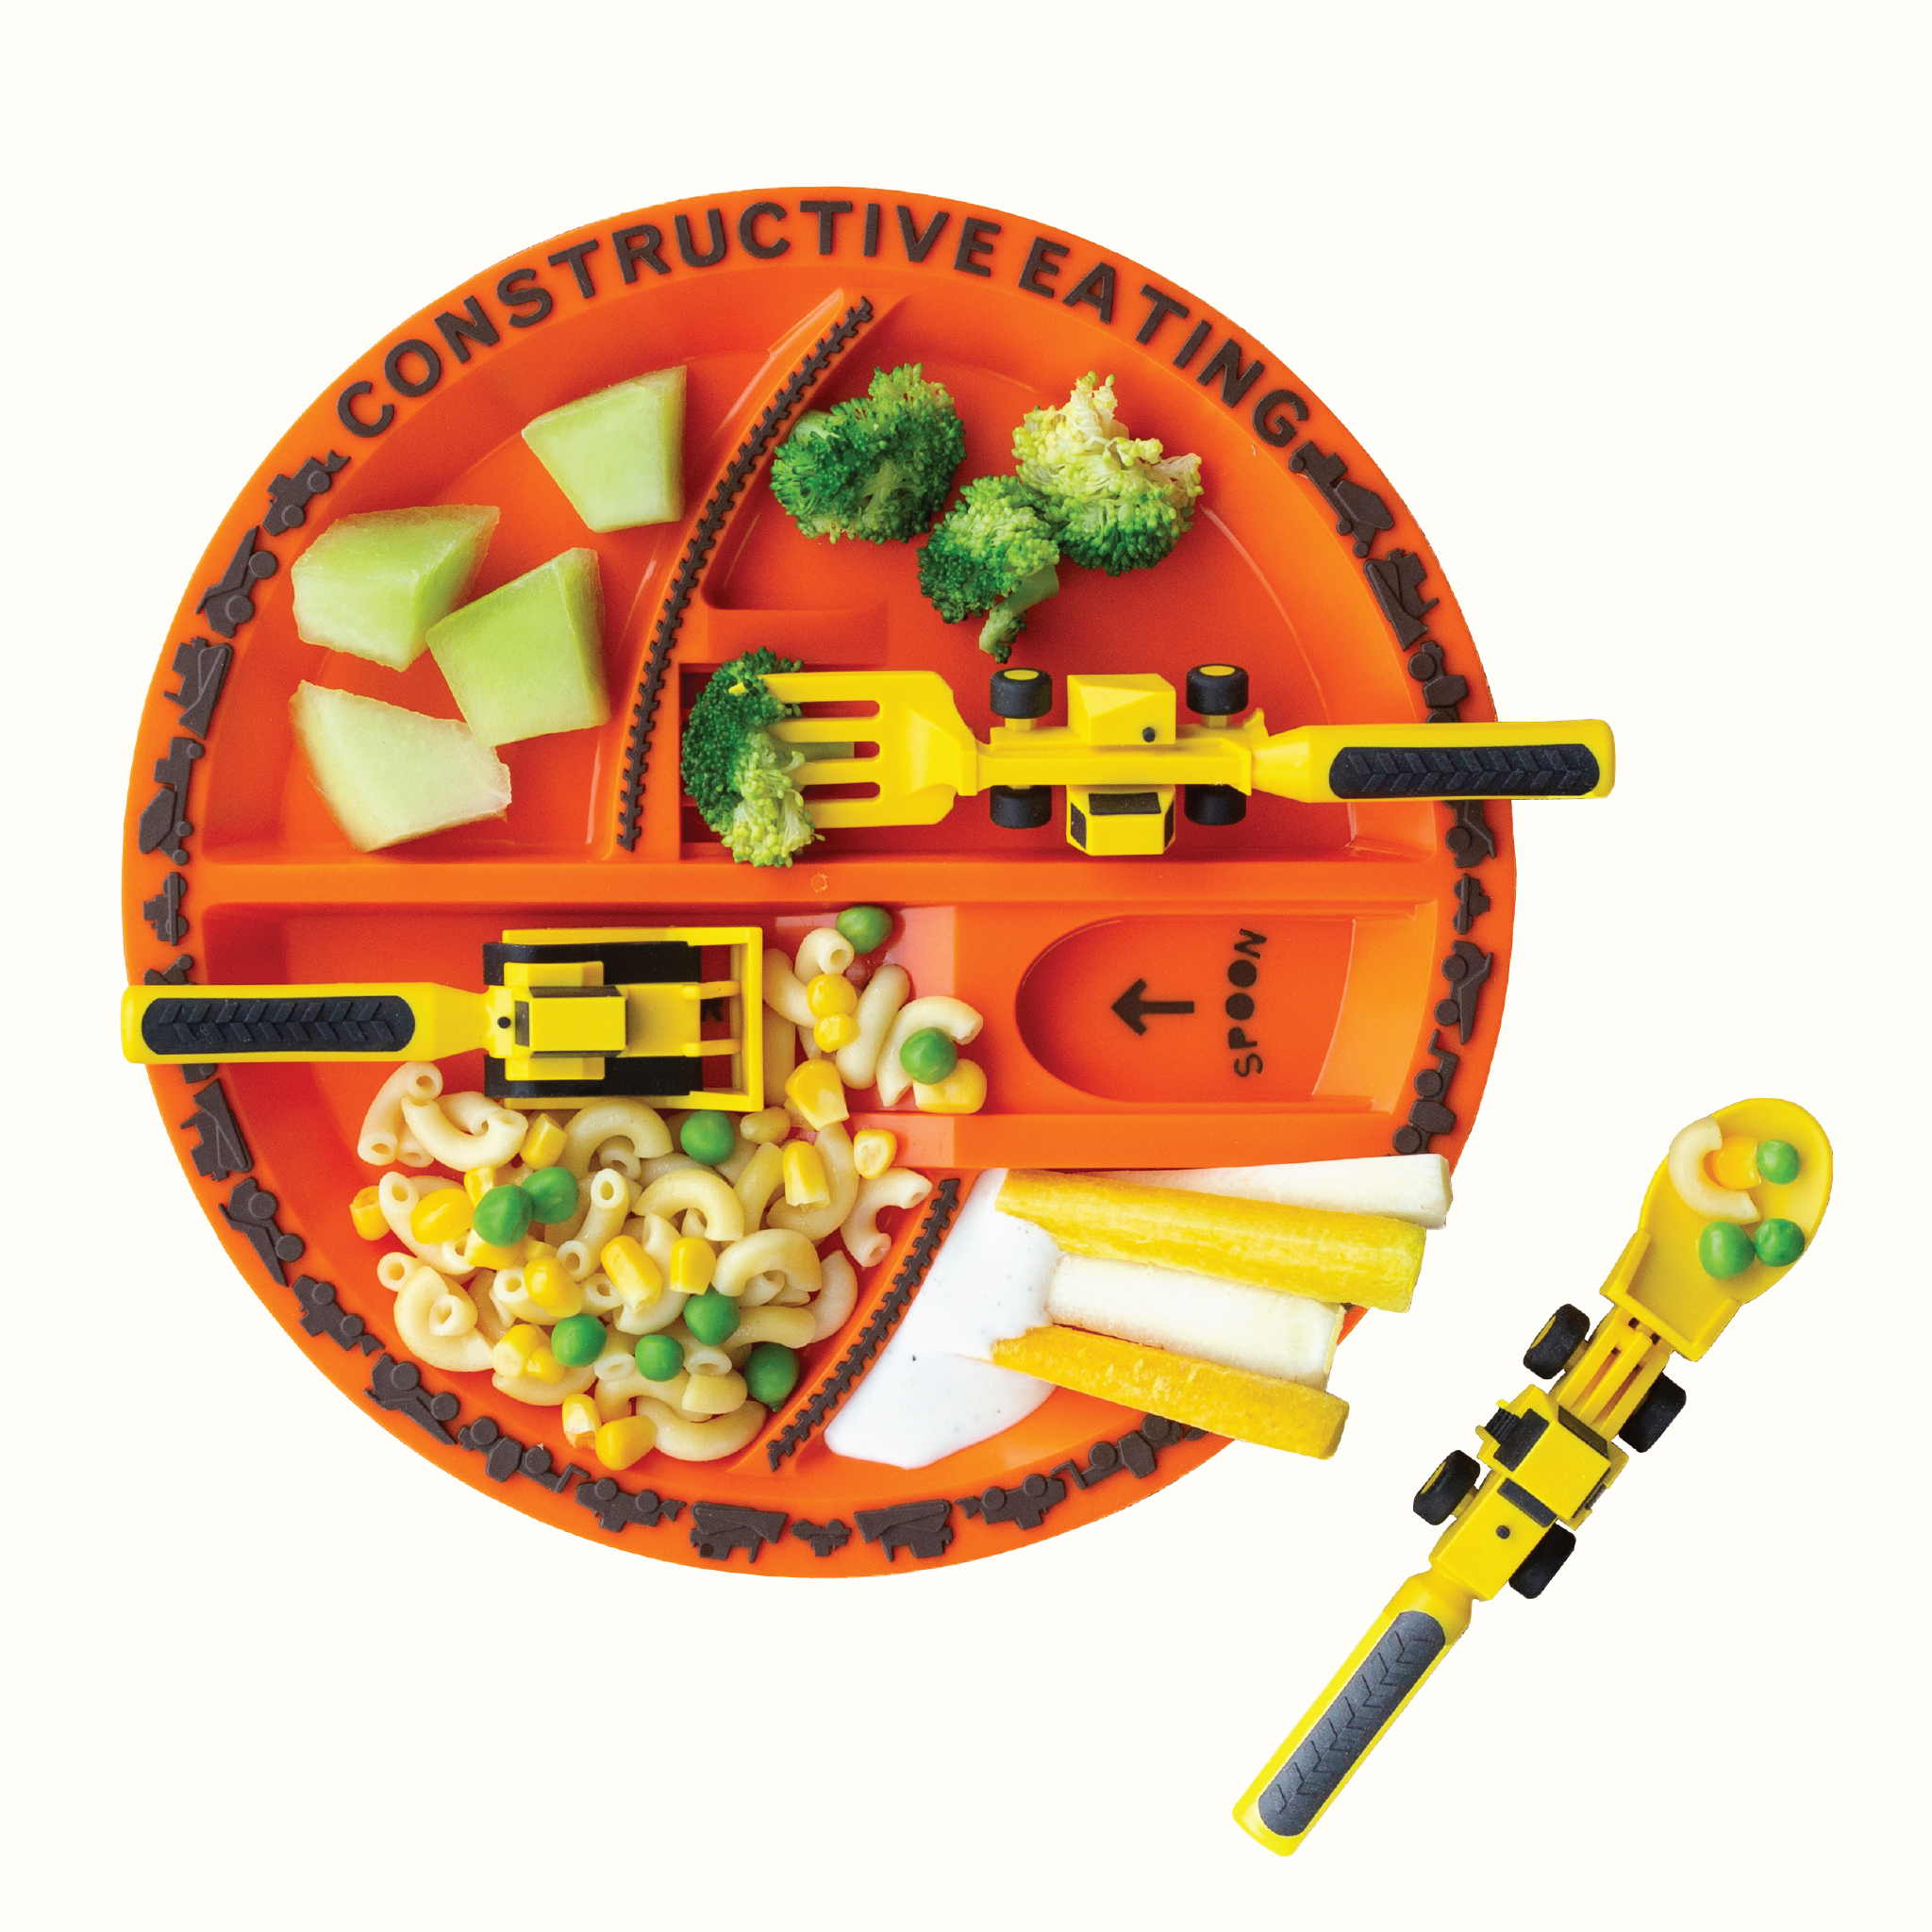 Construction Utensils - Set of 3 – Constructive Eating